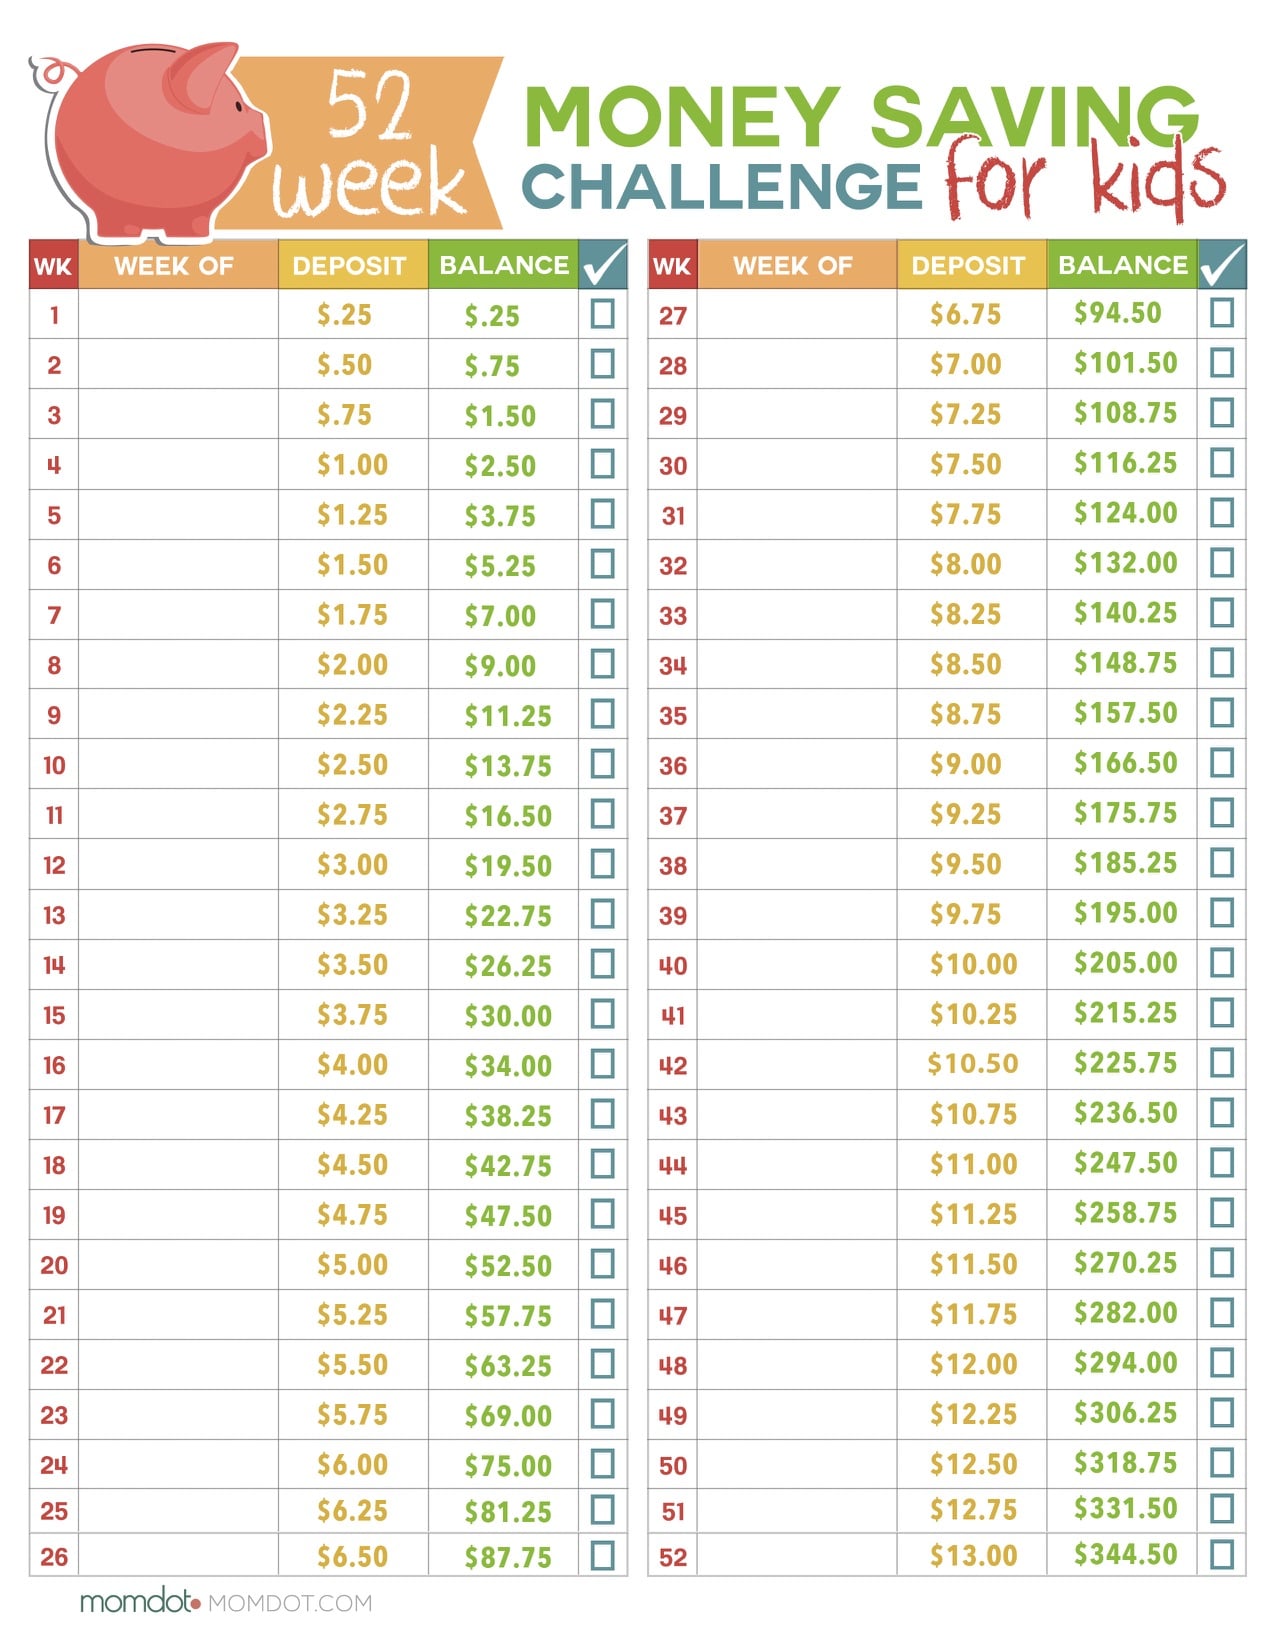 52 Week Money Challenge for Kids